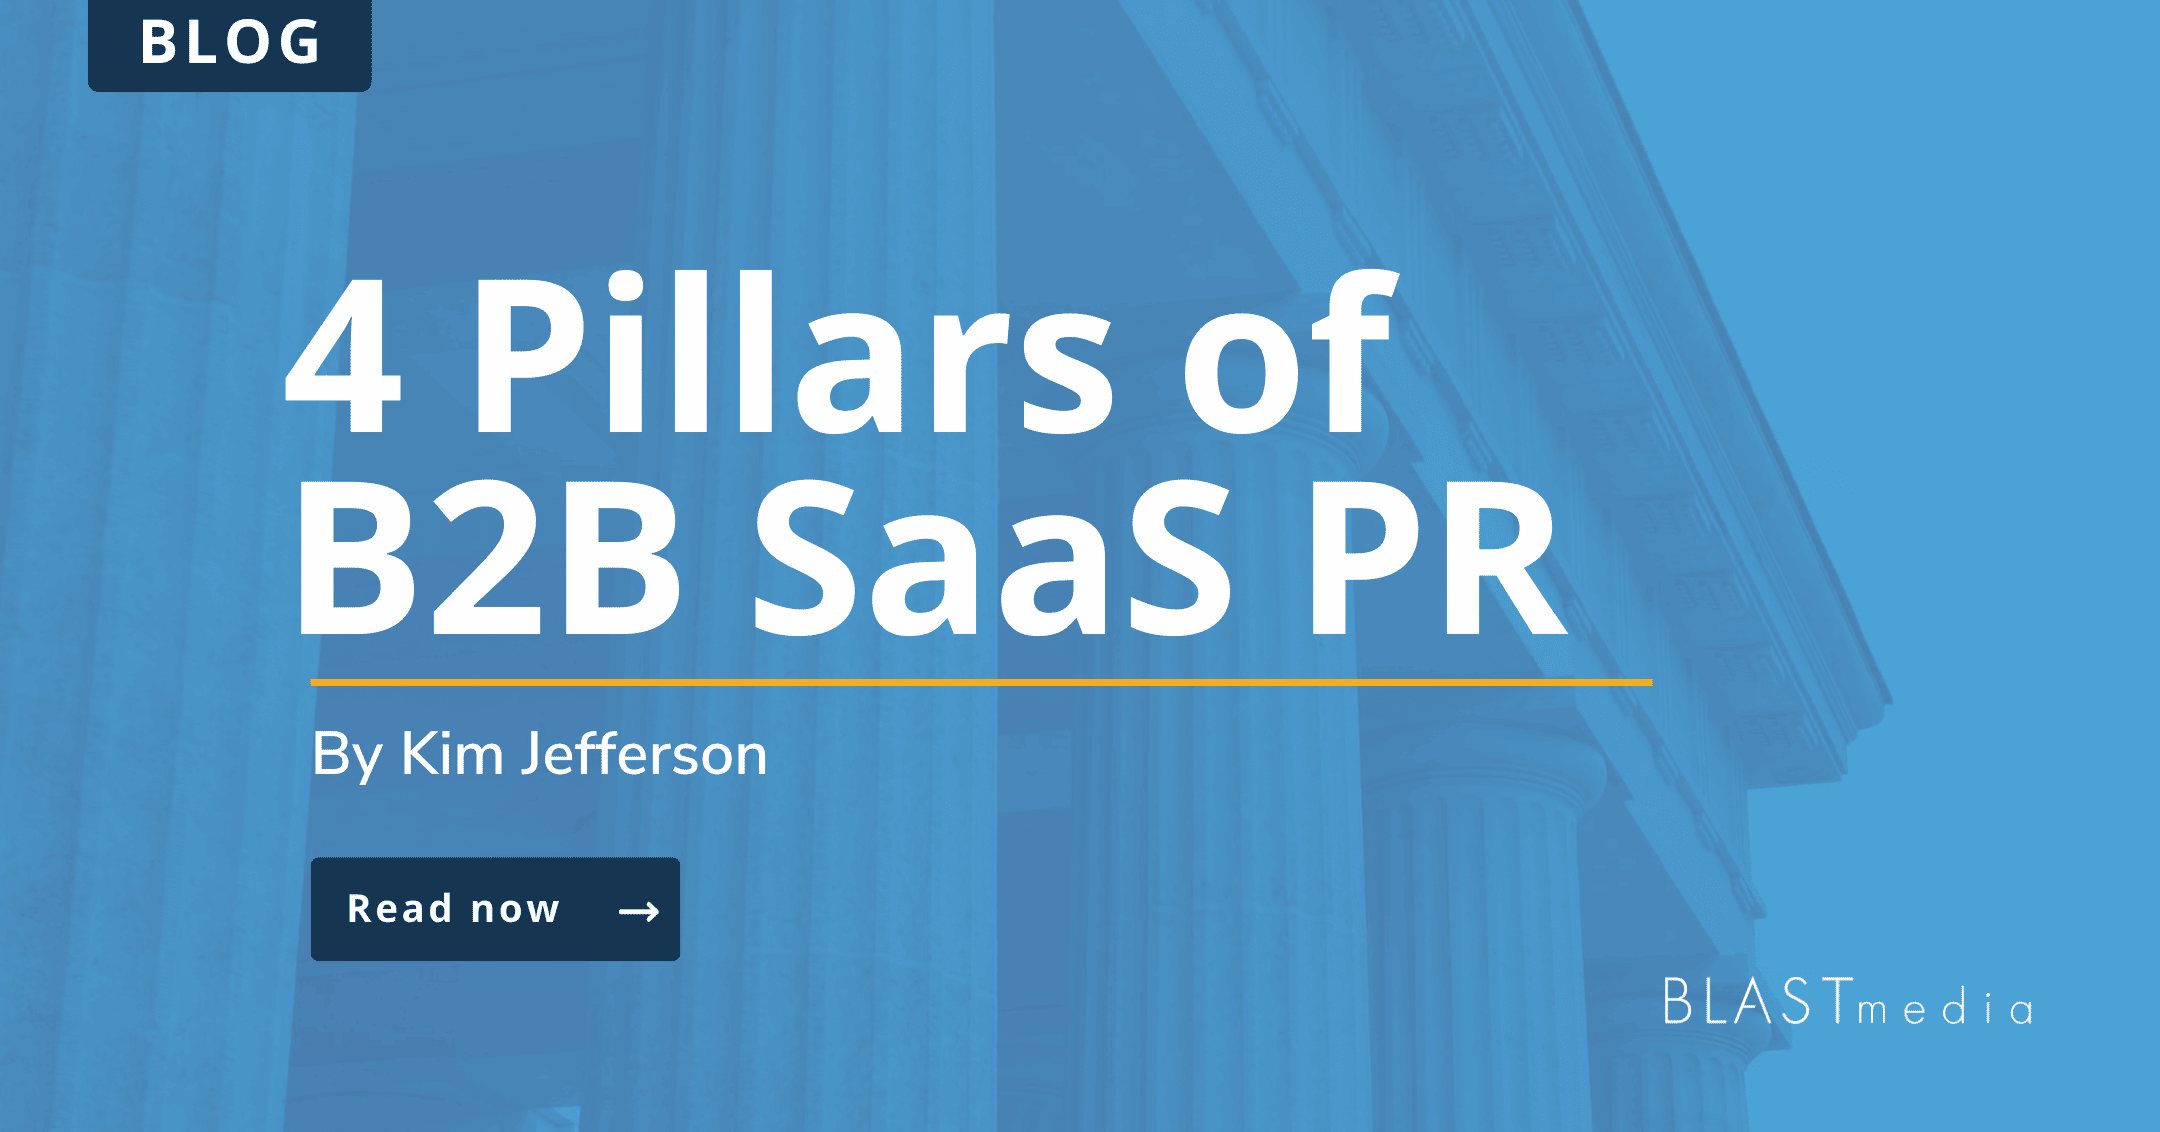 4 Pillars of B2B SaaS PR